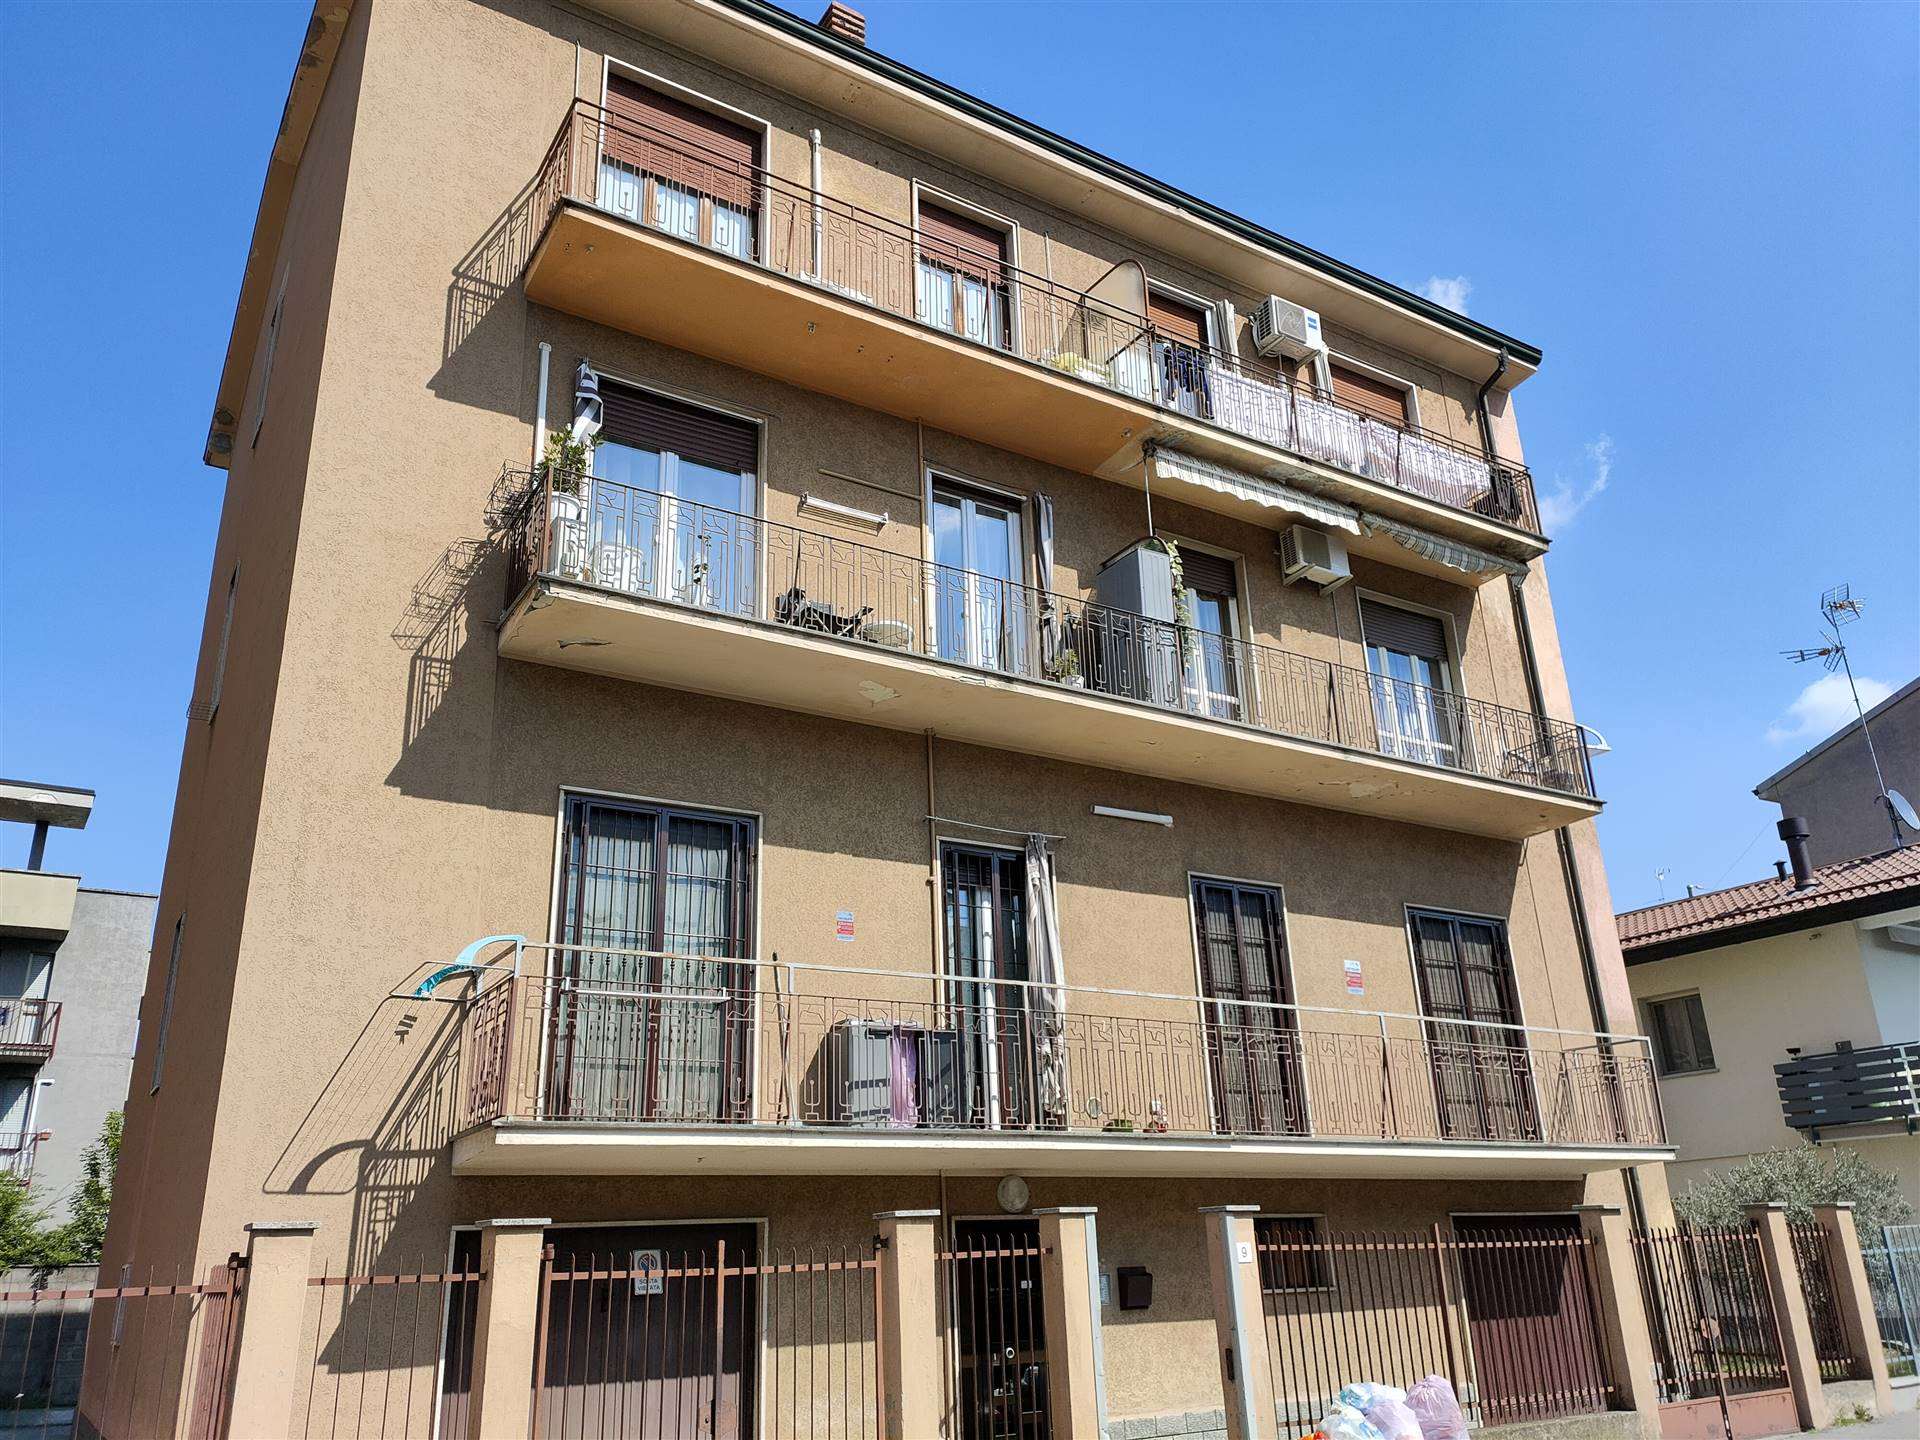 VIGILI DEL FUOCO (VIA CADAMOSTO), LODI, Apartment for sale of 36 Sq. mt., Habitable, Heating Individual heating system, Energetic class: G, Epi: 355,